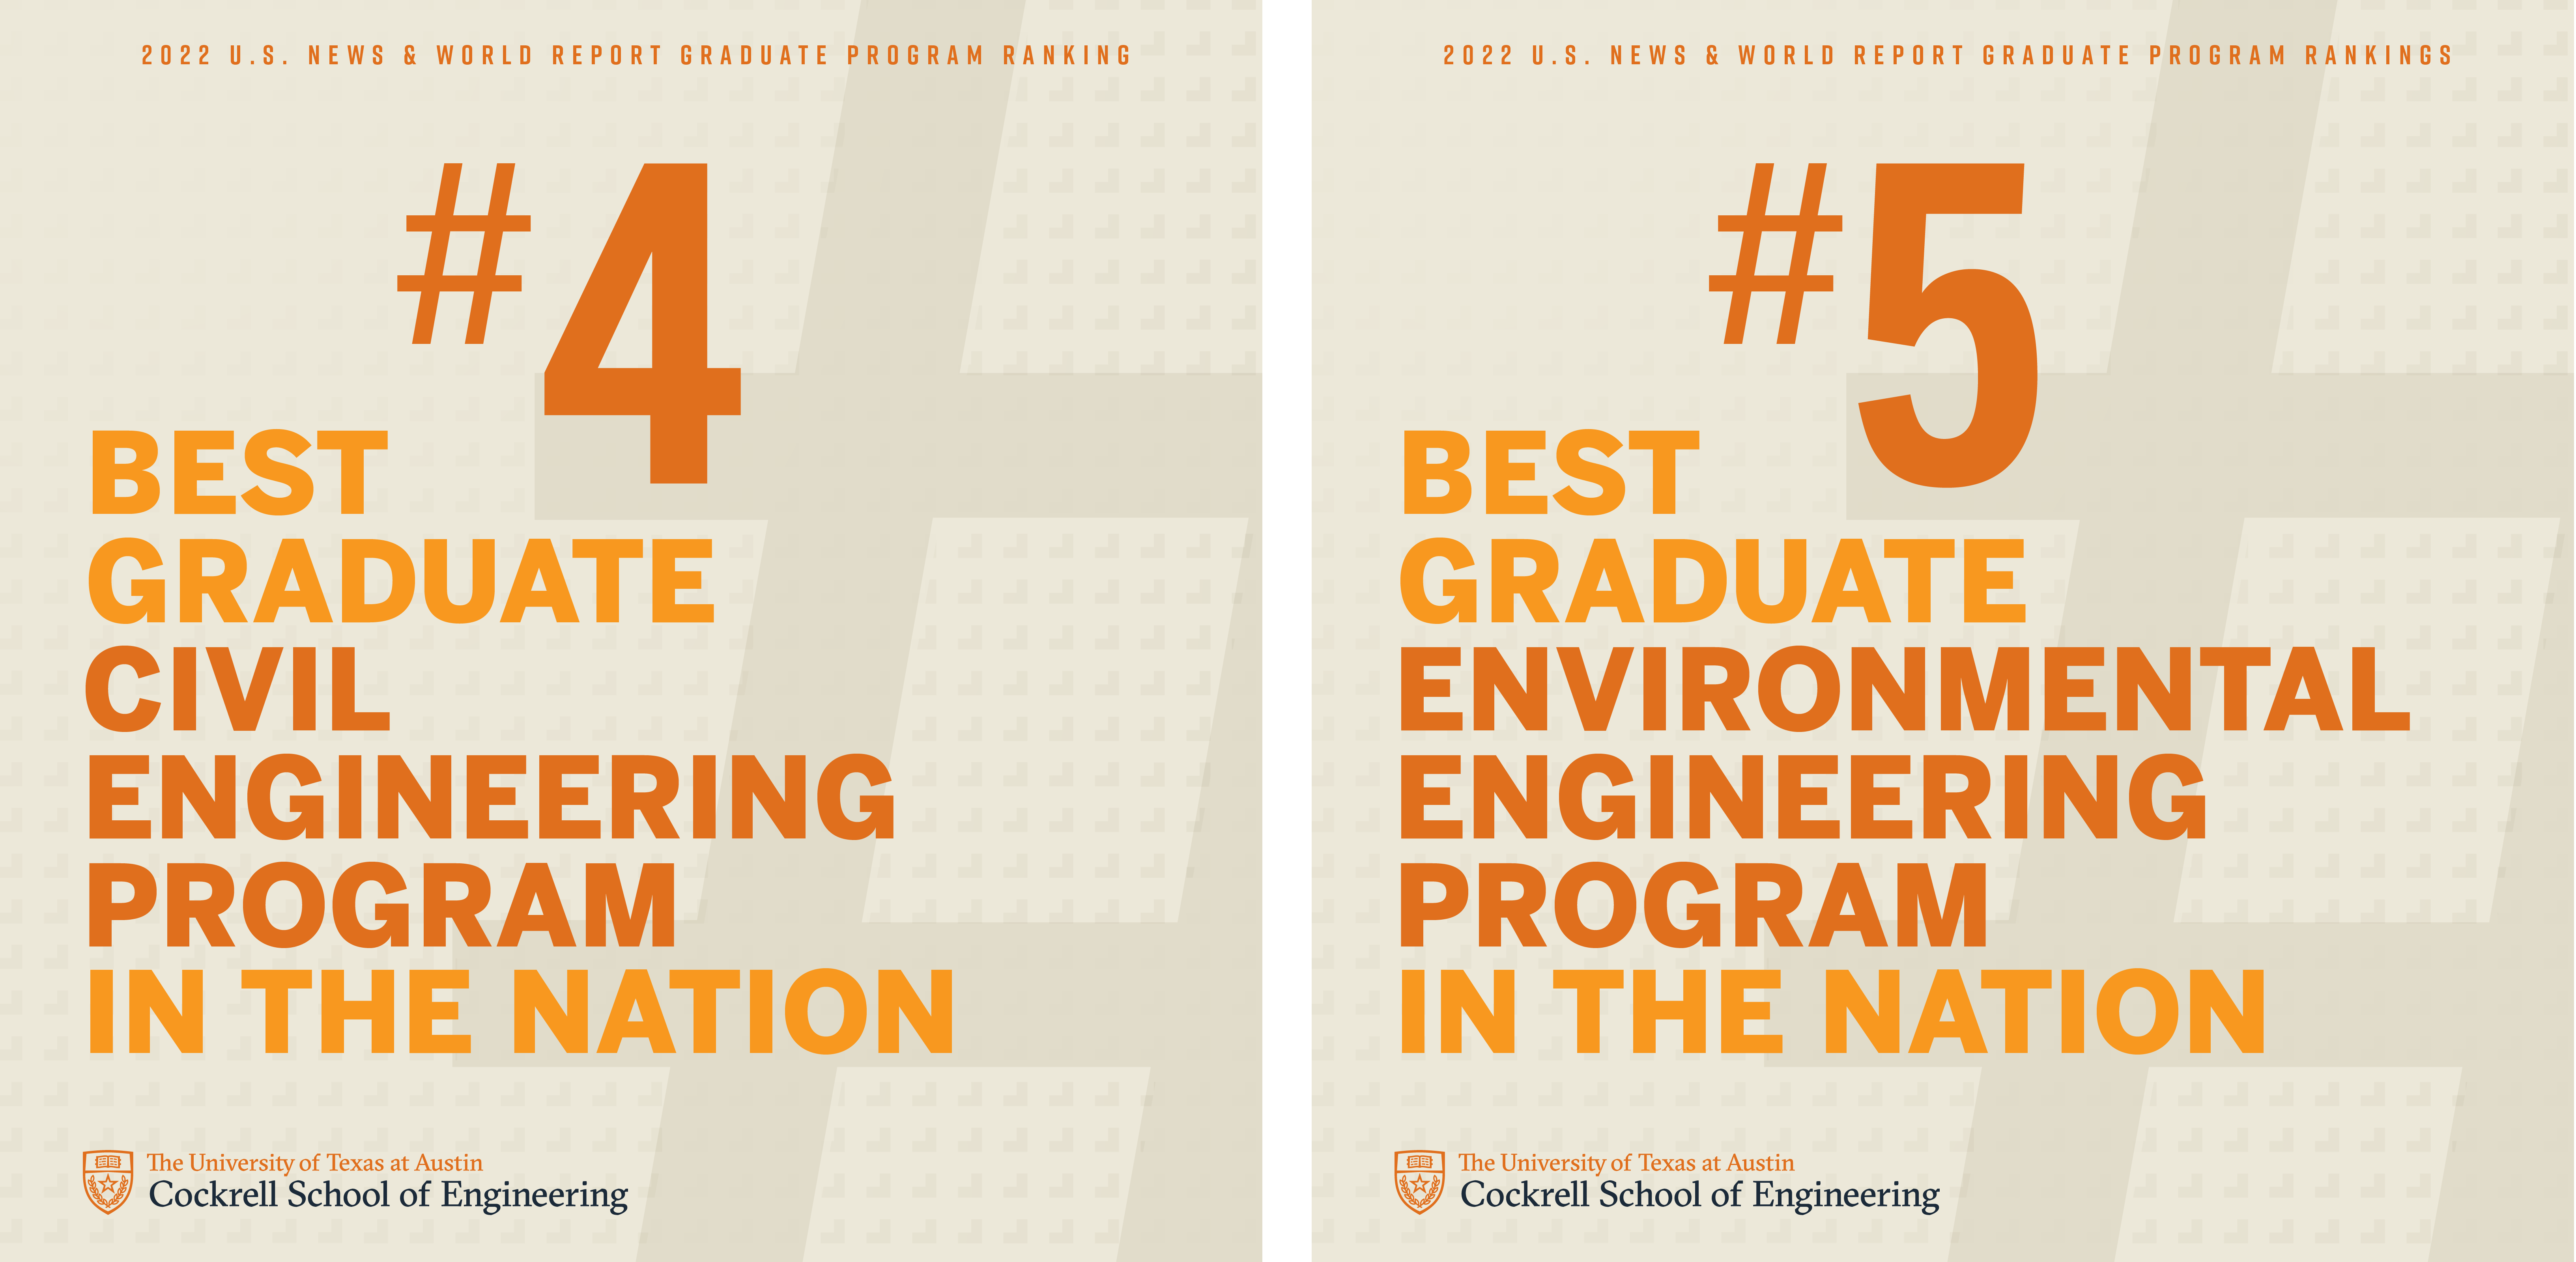 graduate program in Civil Engineering ranked #4 and the Environmental/Environmental Health Engineering program ranked #5